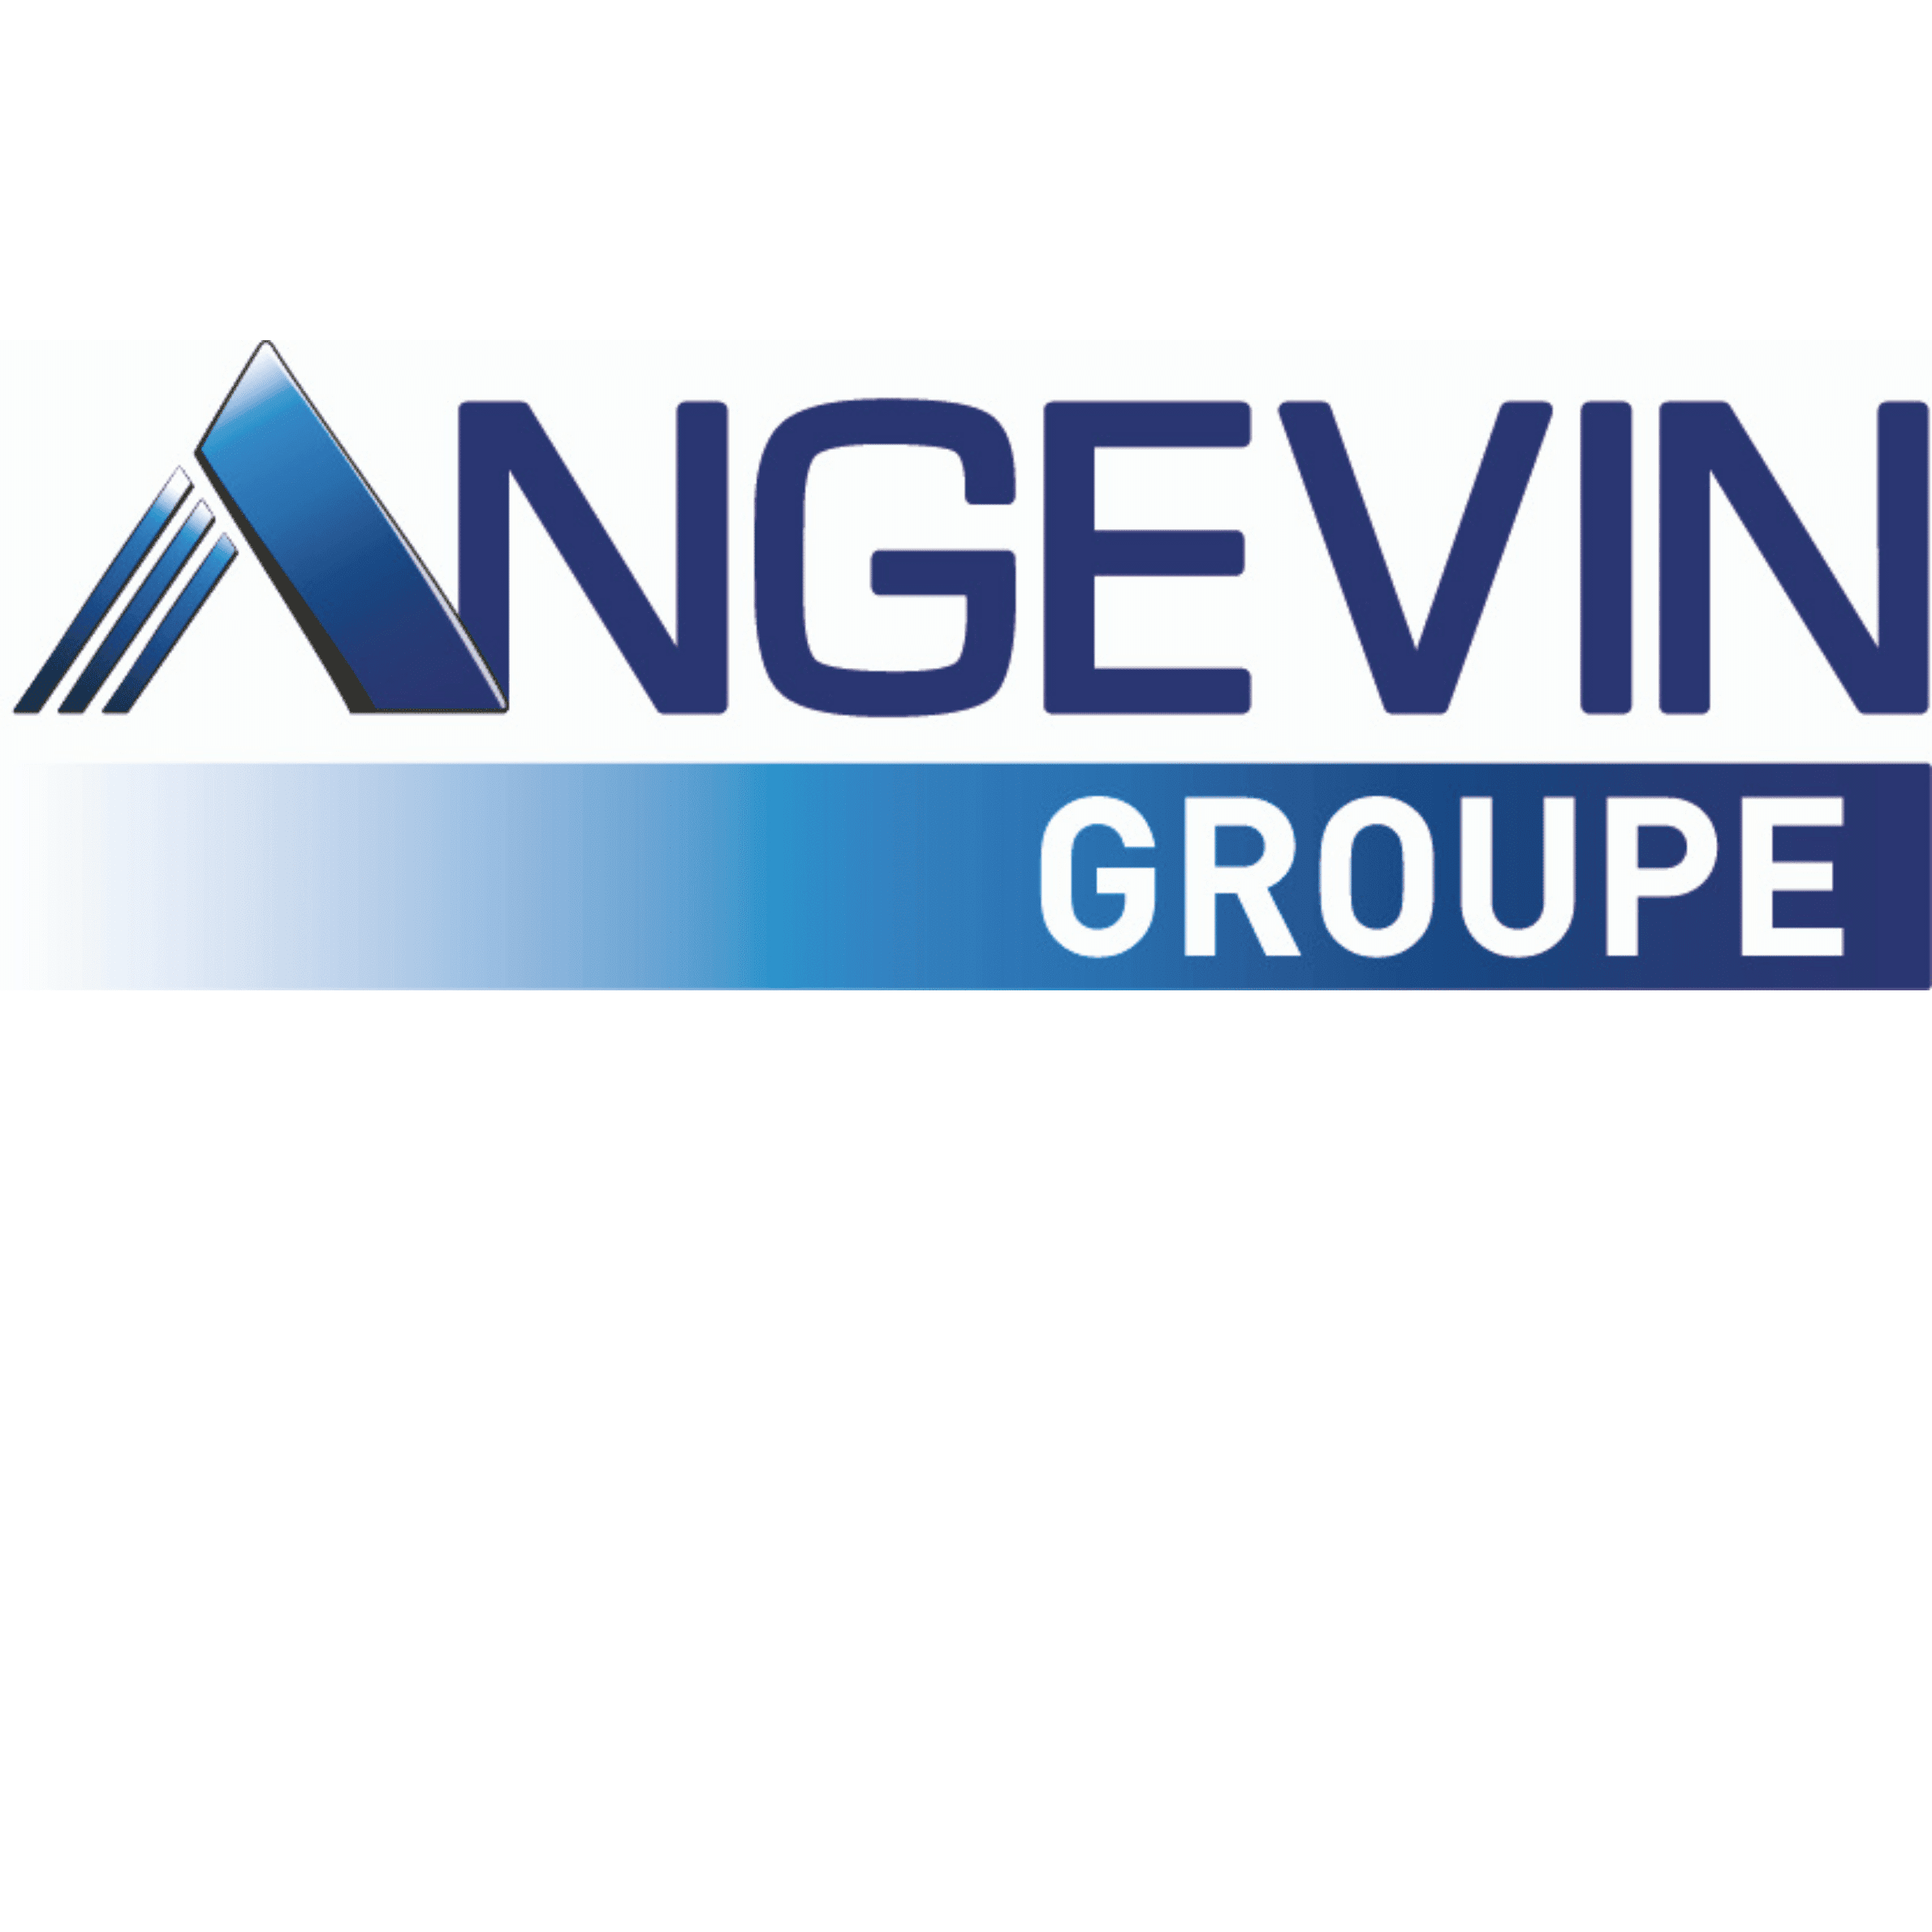 Angevin logo